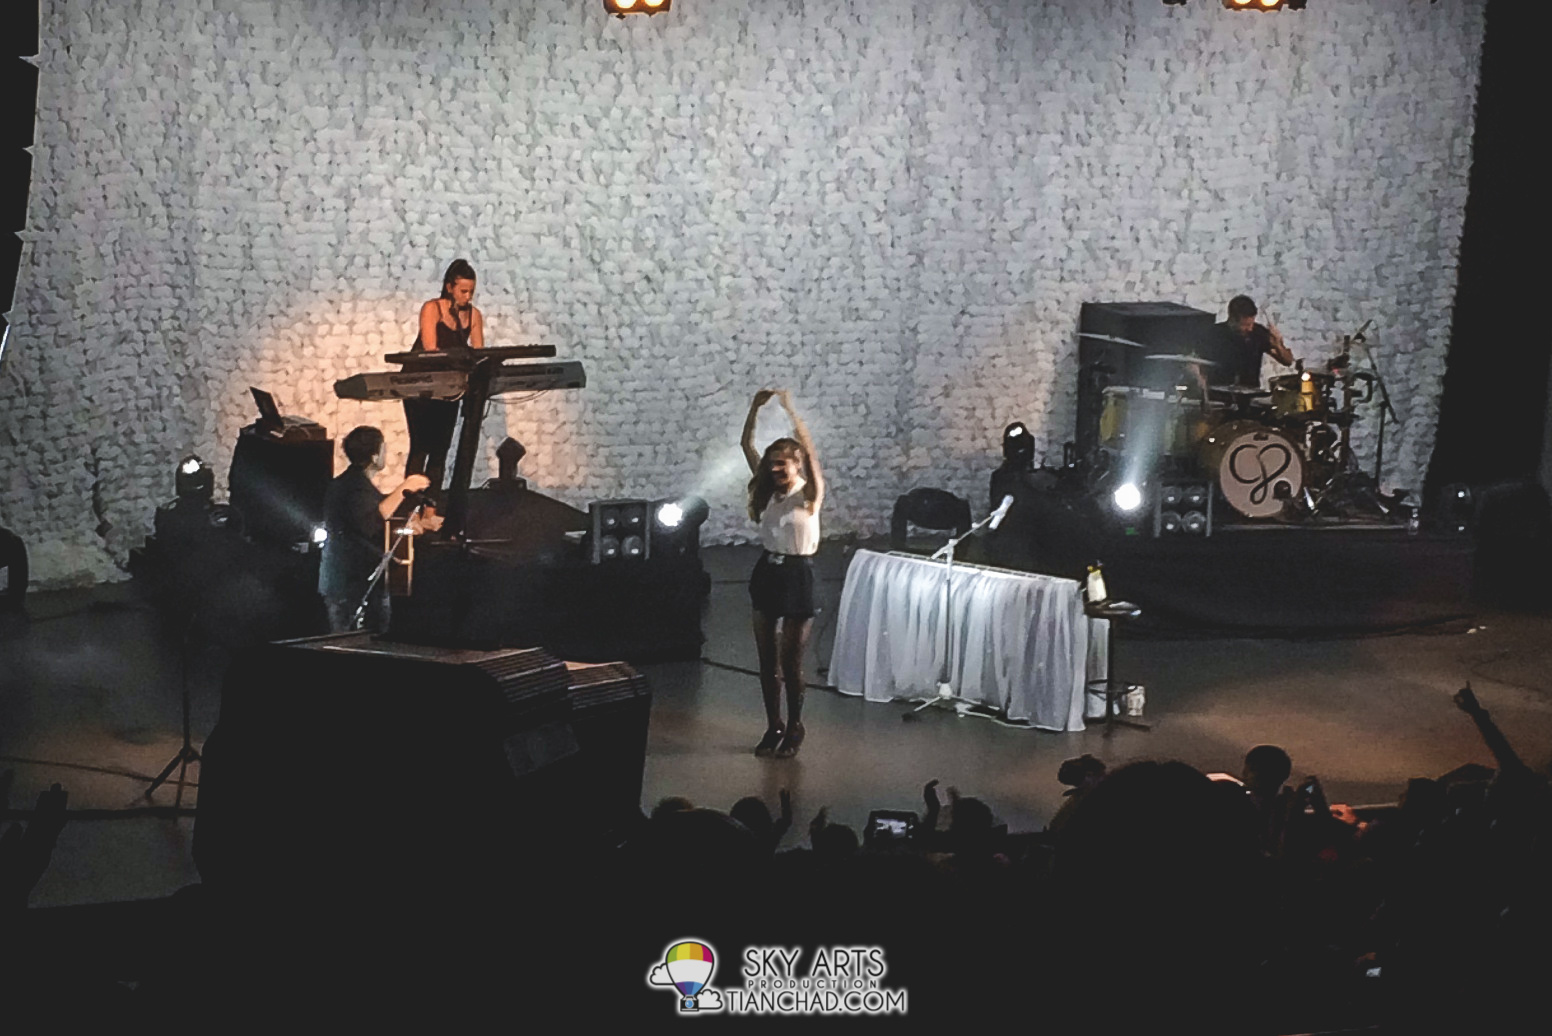 Christina Perri Live in KL 2015 - Actual Concert Night @ KL Live Ballerina Christina